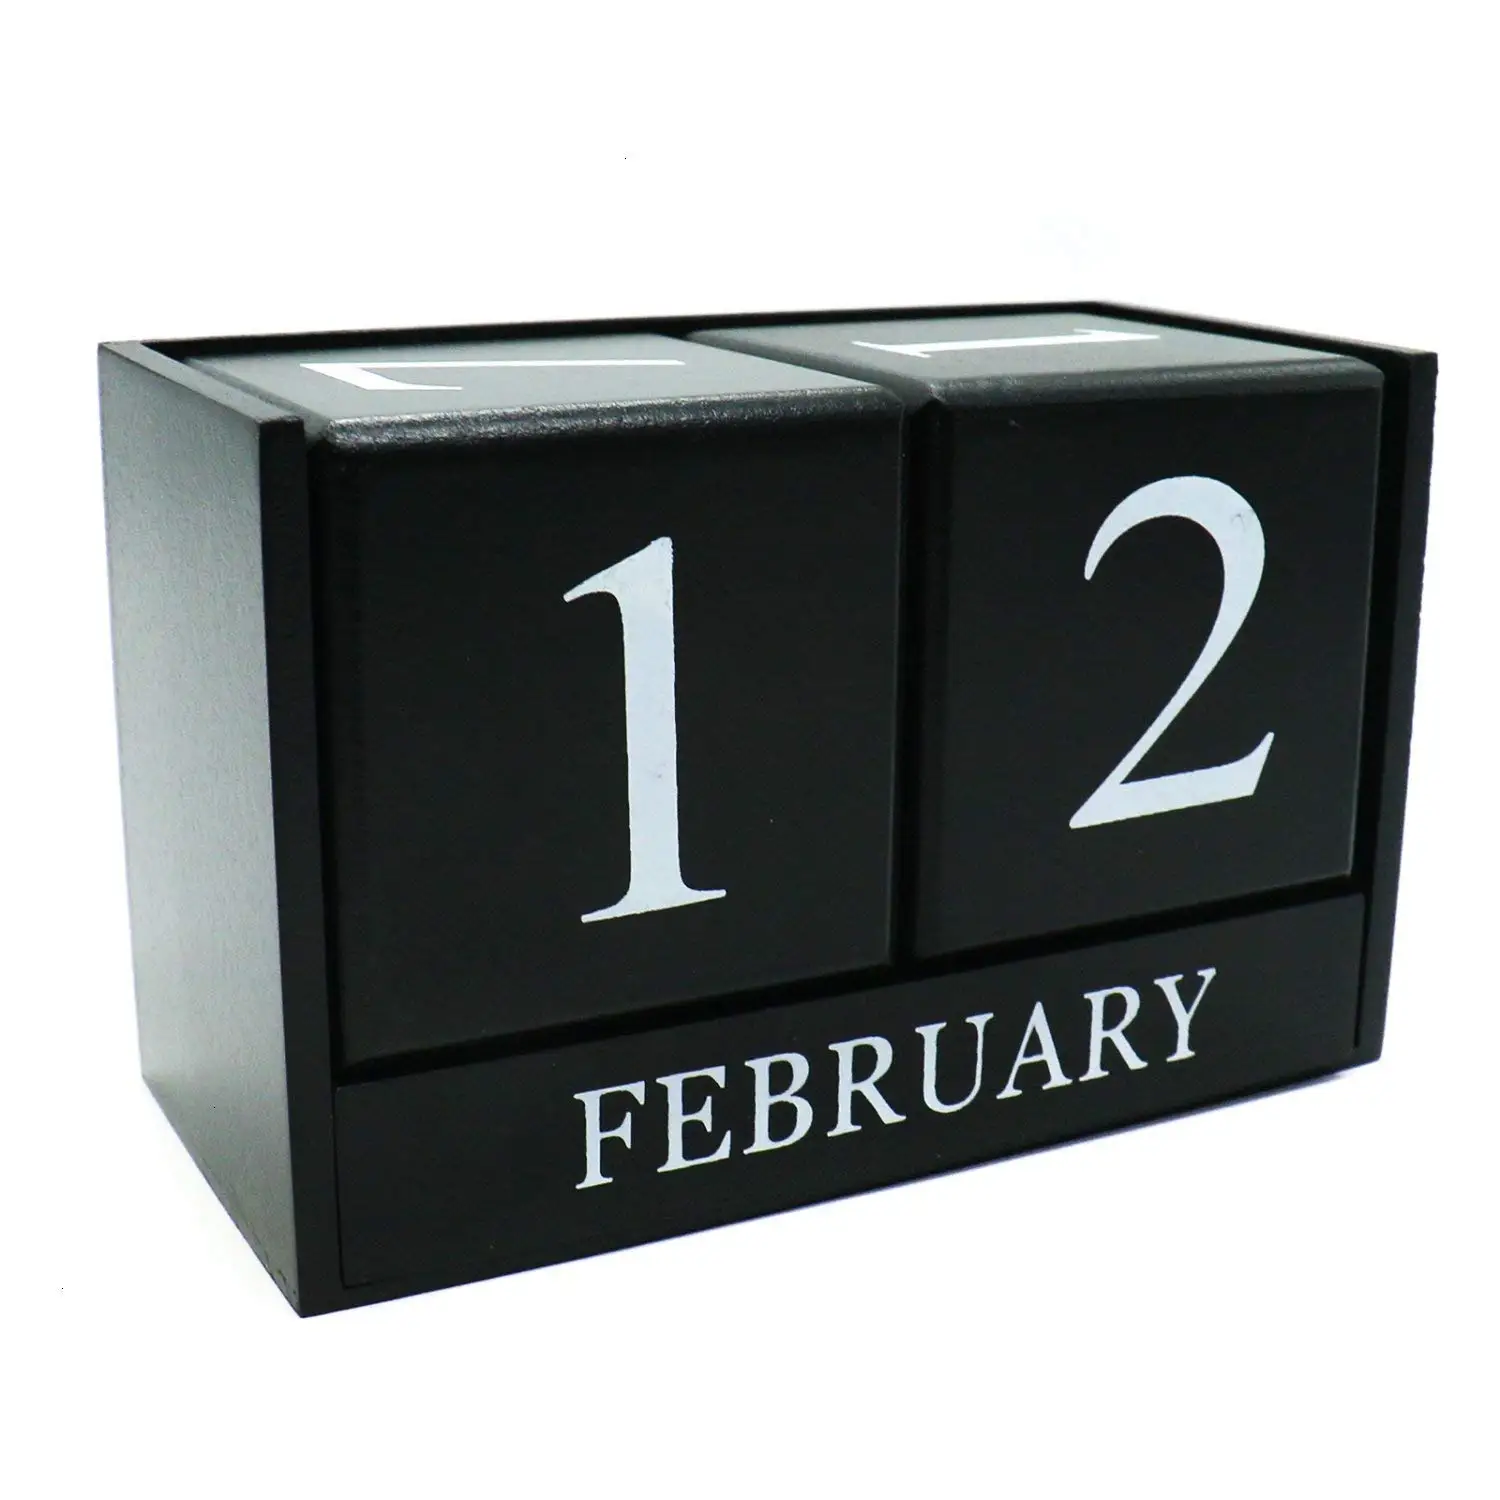 Cheap Perpetual Calendar Block find Perpetual Calendar Block deals on